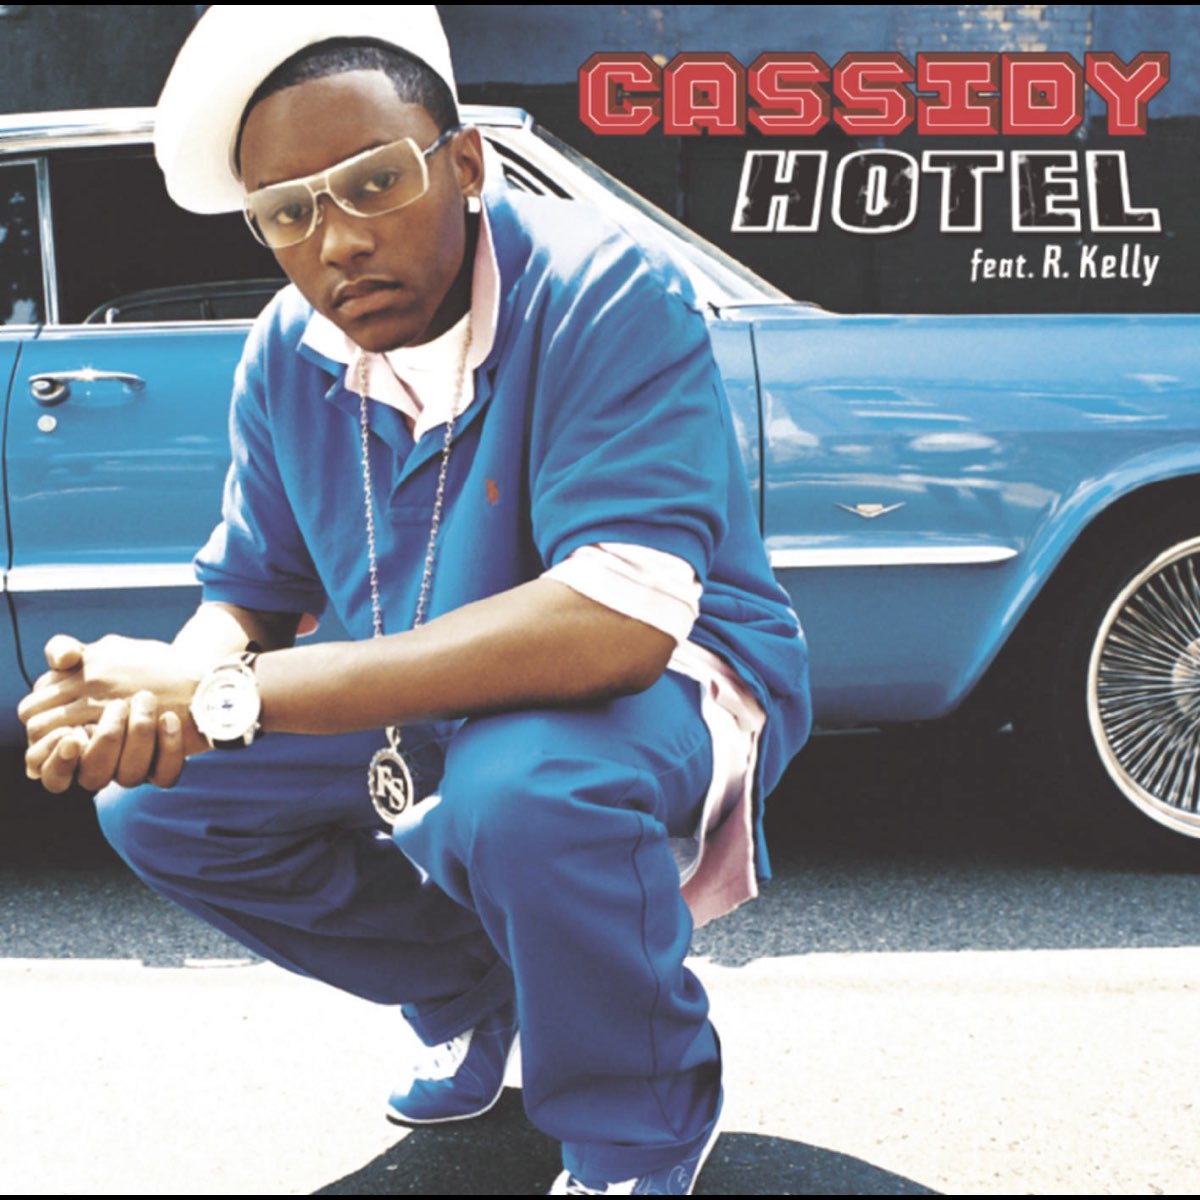 Hotel (feat. R. Kelly) - Single - Album by Cassidy - Apple Music